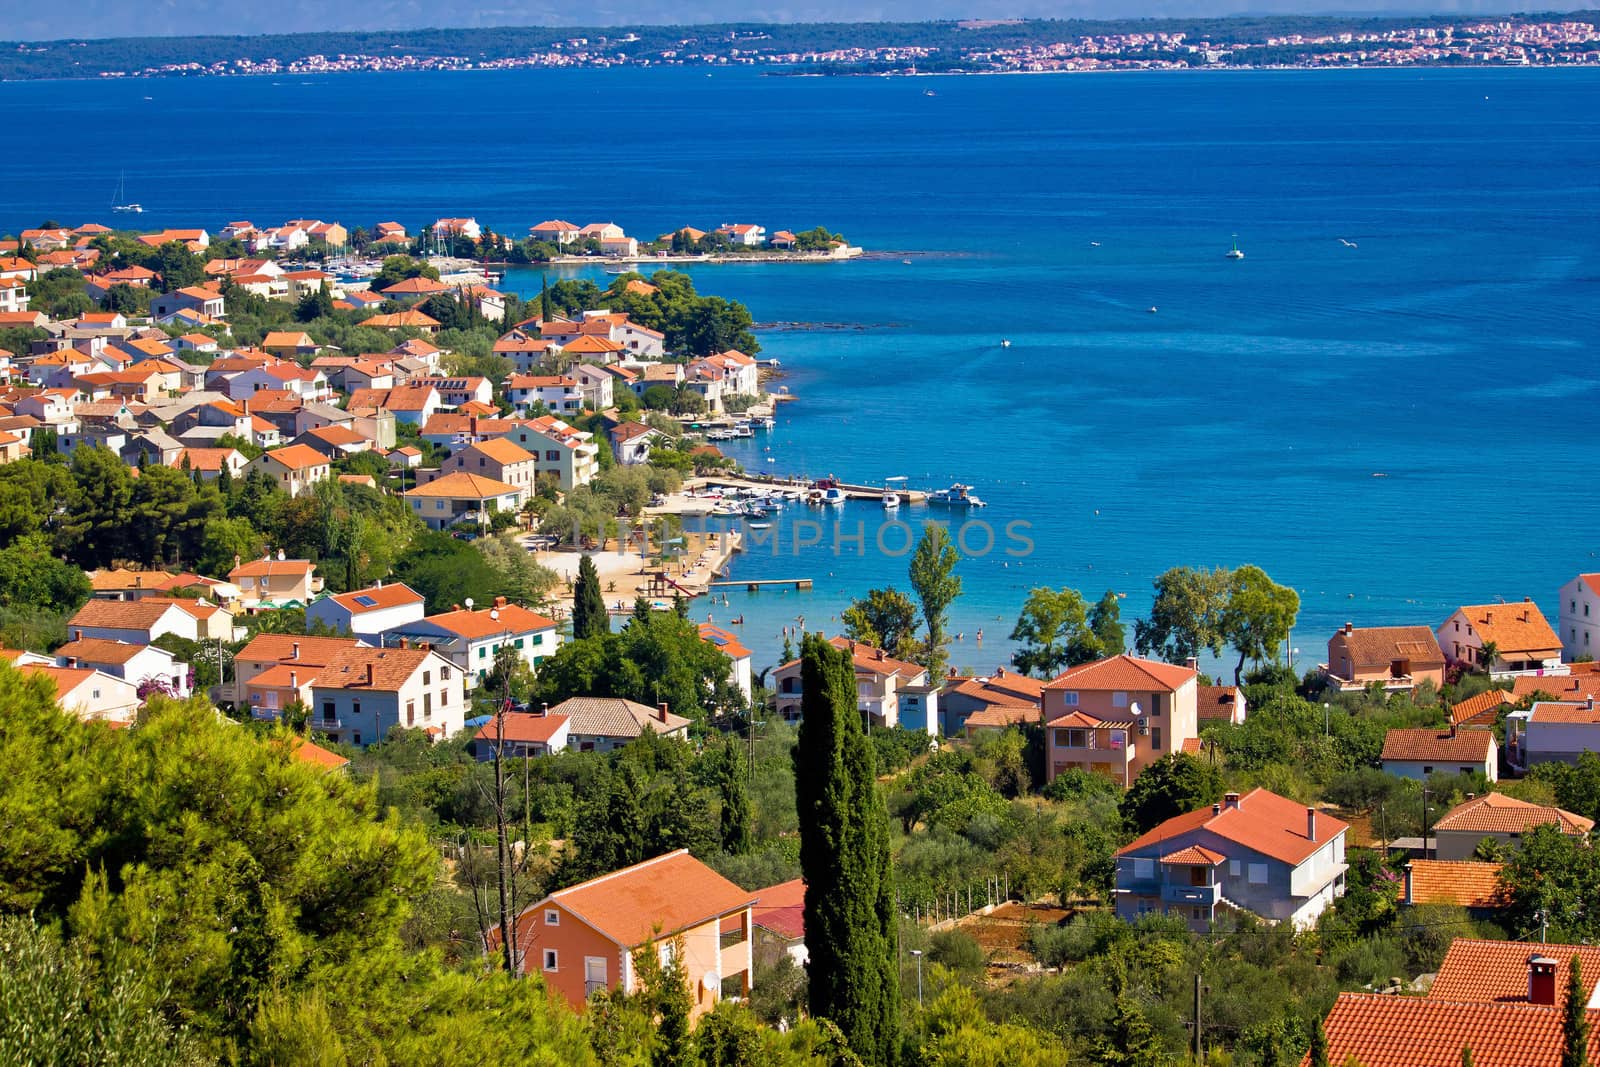 Island of Ugljan colorful coastline, Town of Preko, Dalmatia, Croatia